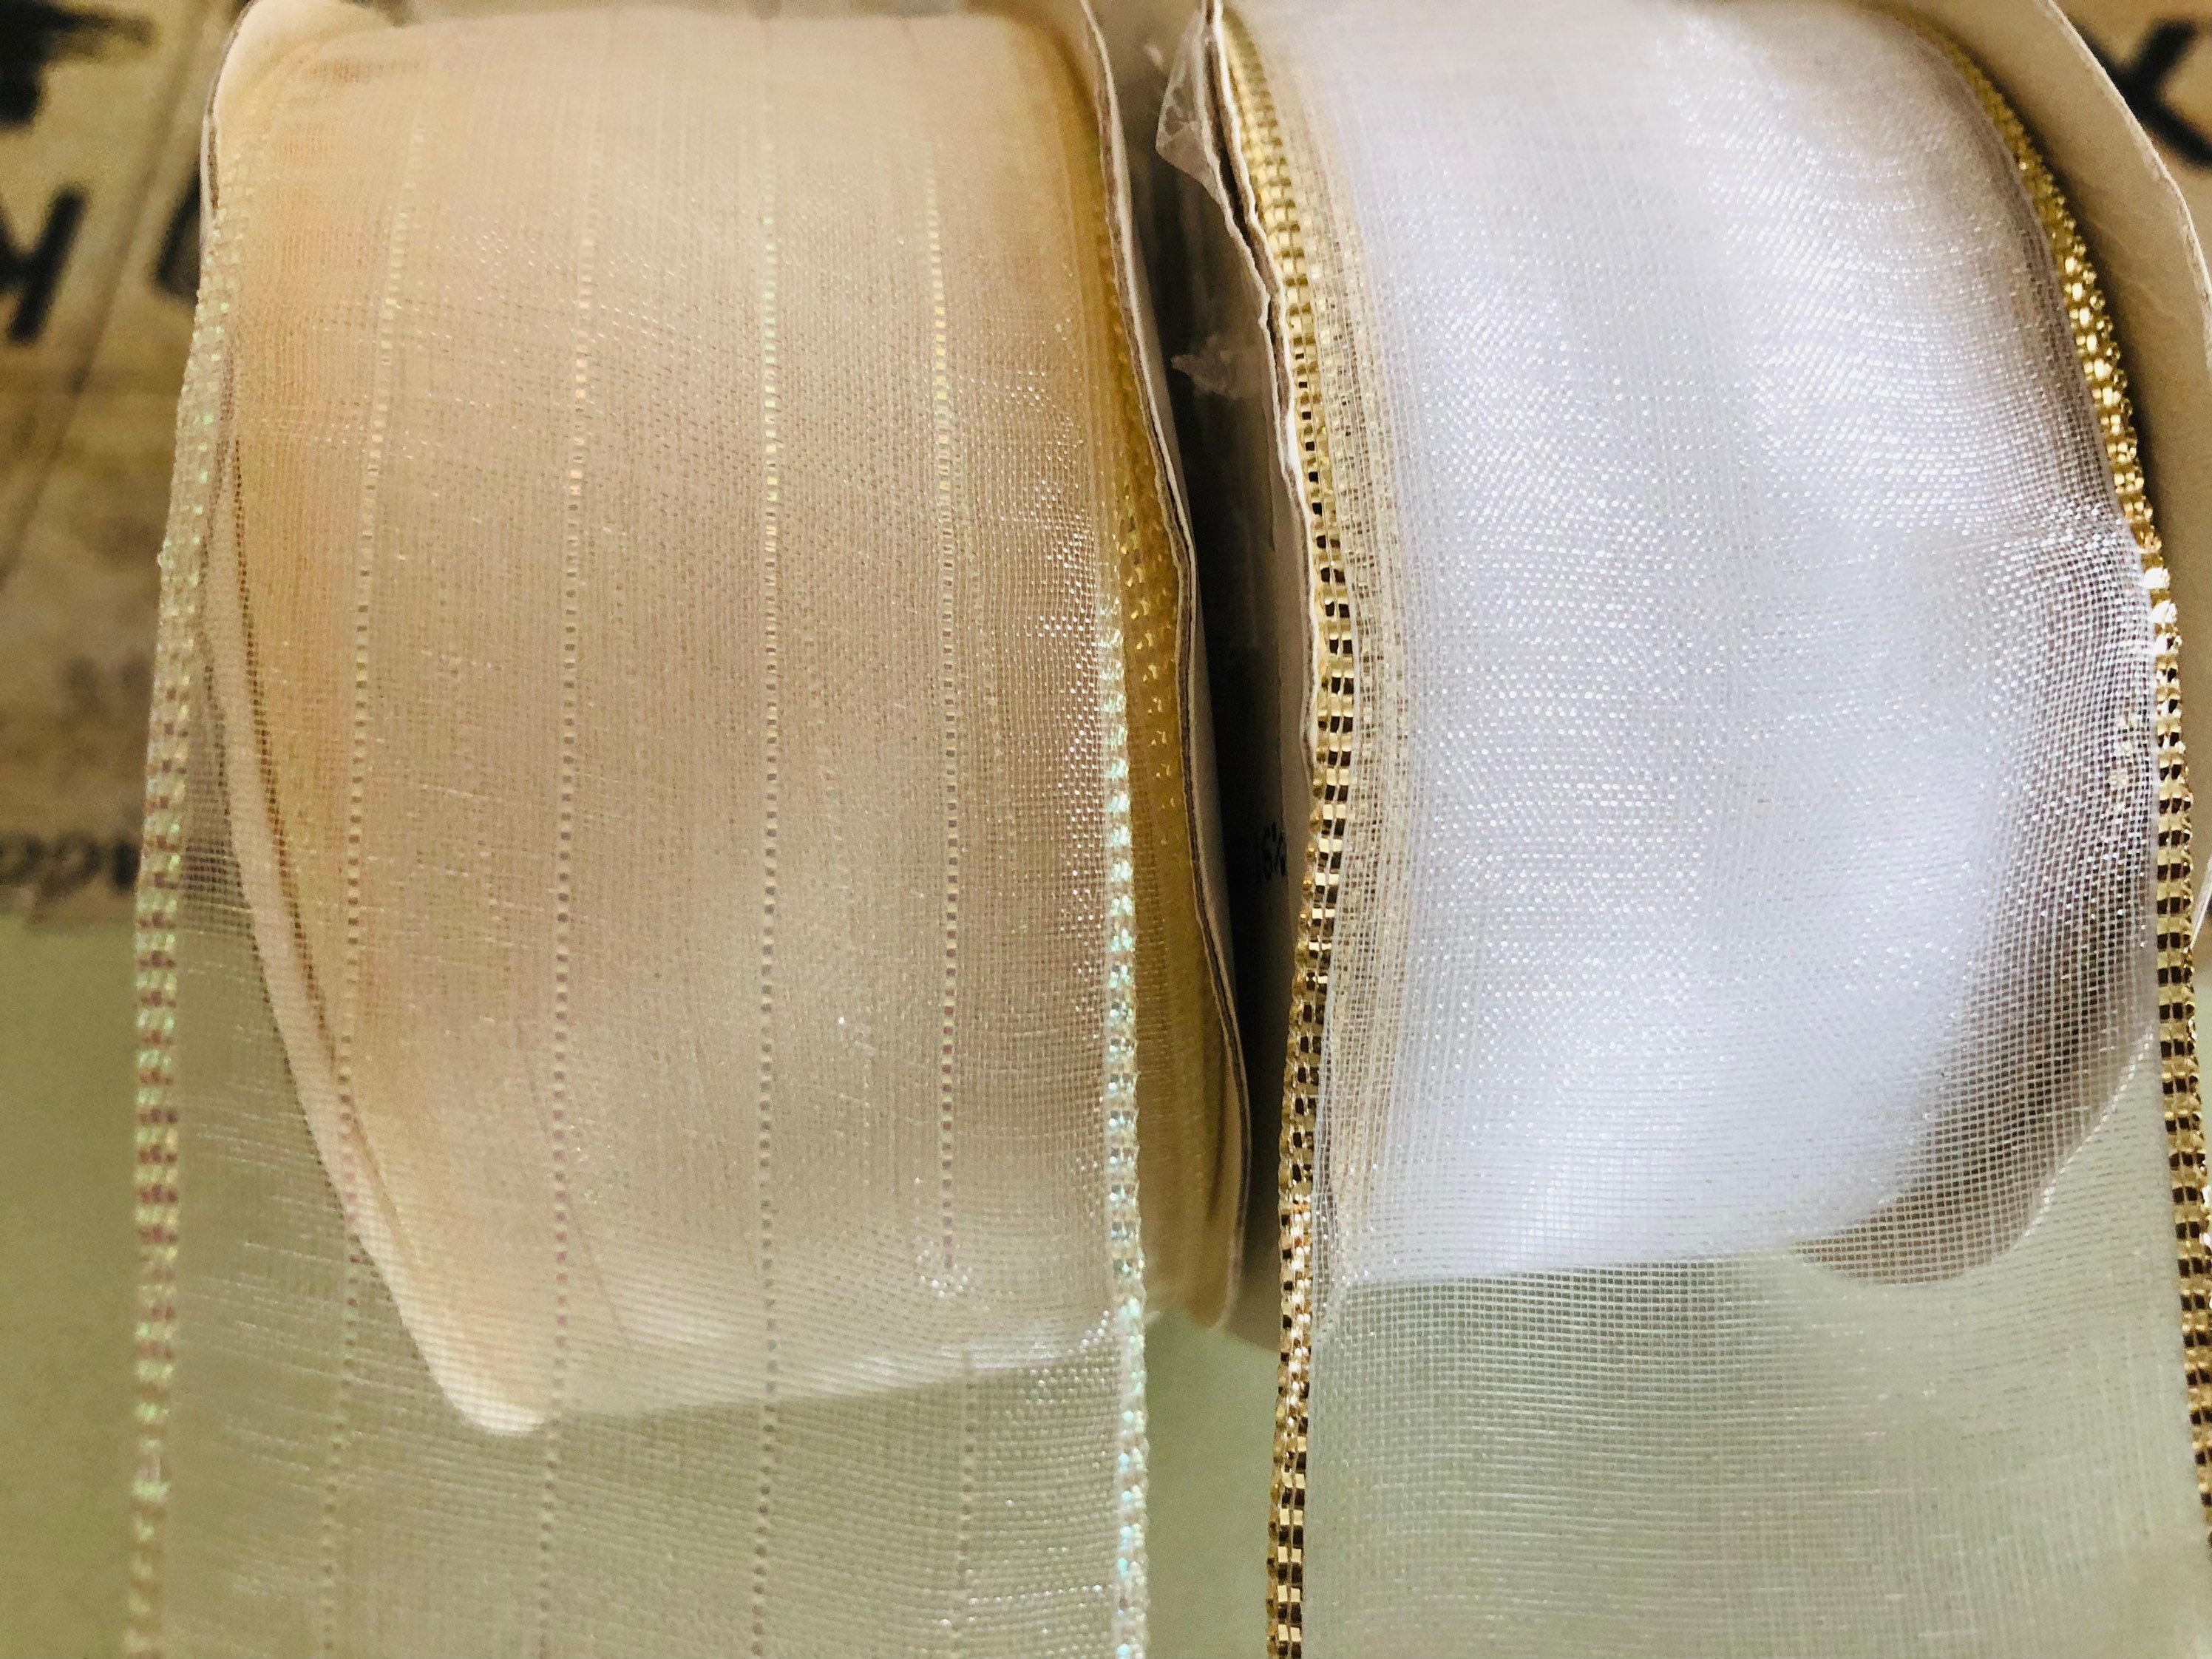 5m of White Chiffon Ribbon White Chiffon to Decorate an Envelope